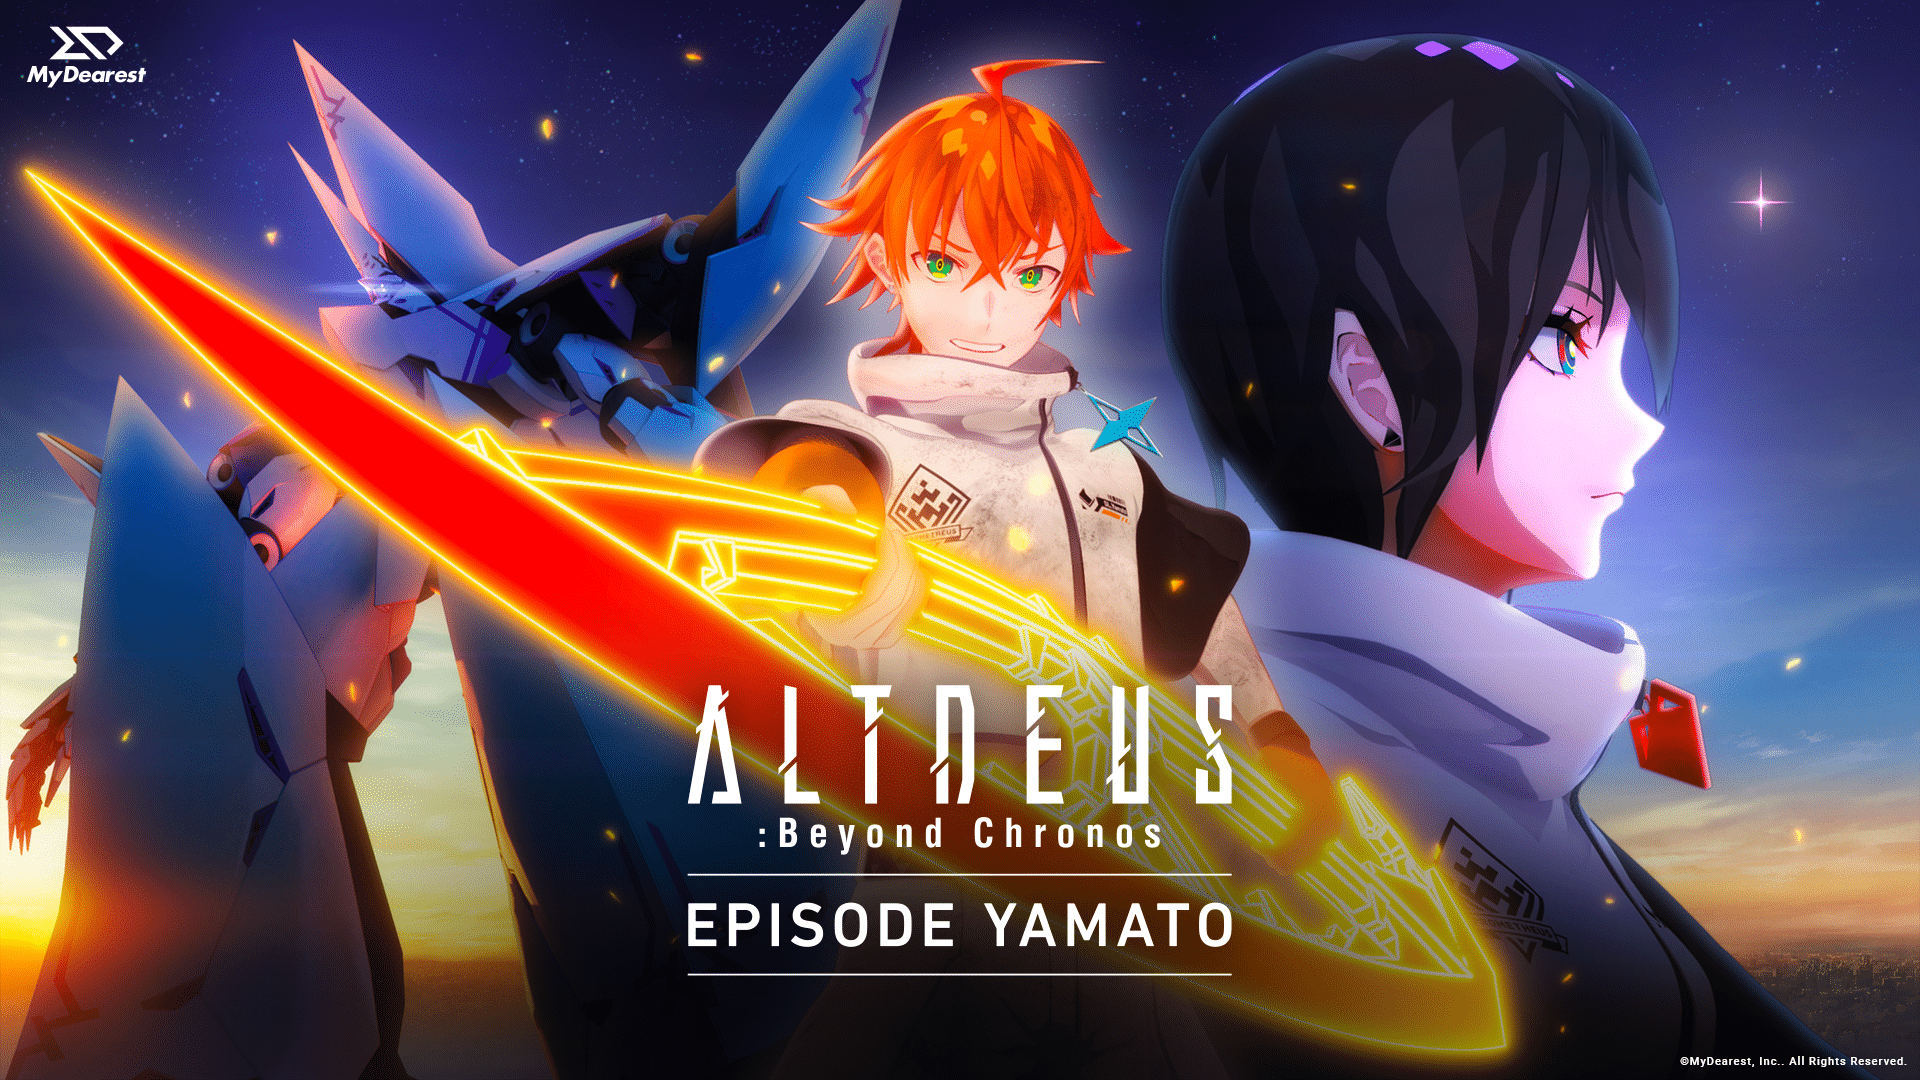 ALTDEUS: Beyond Chronos Reveals Episode Yamato DLC Coming Next Month